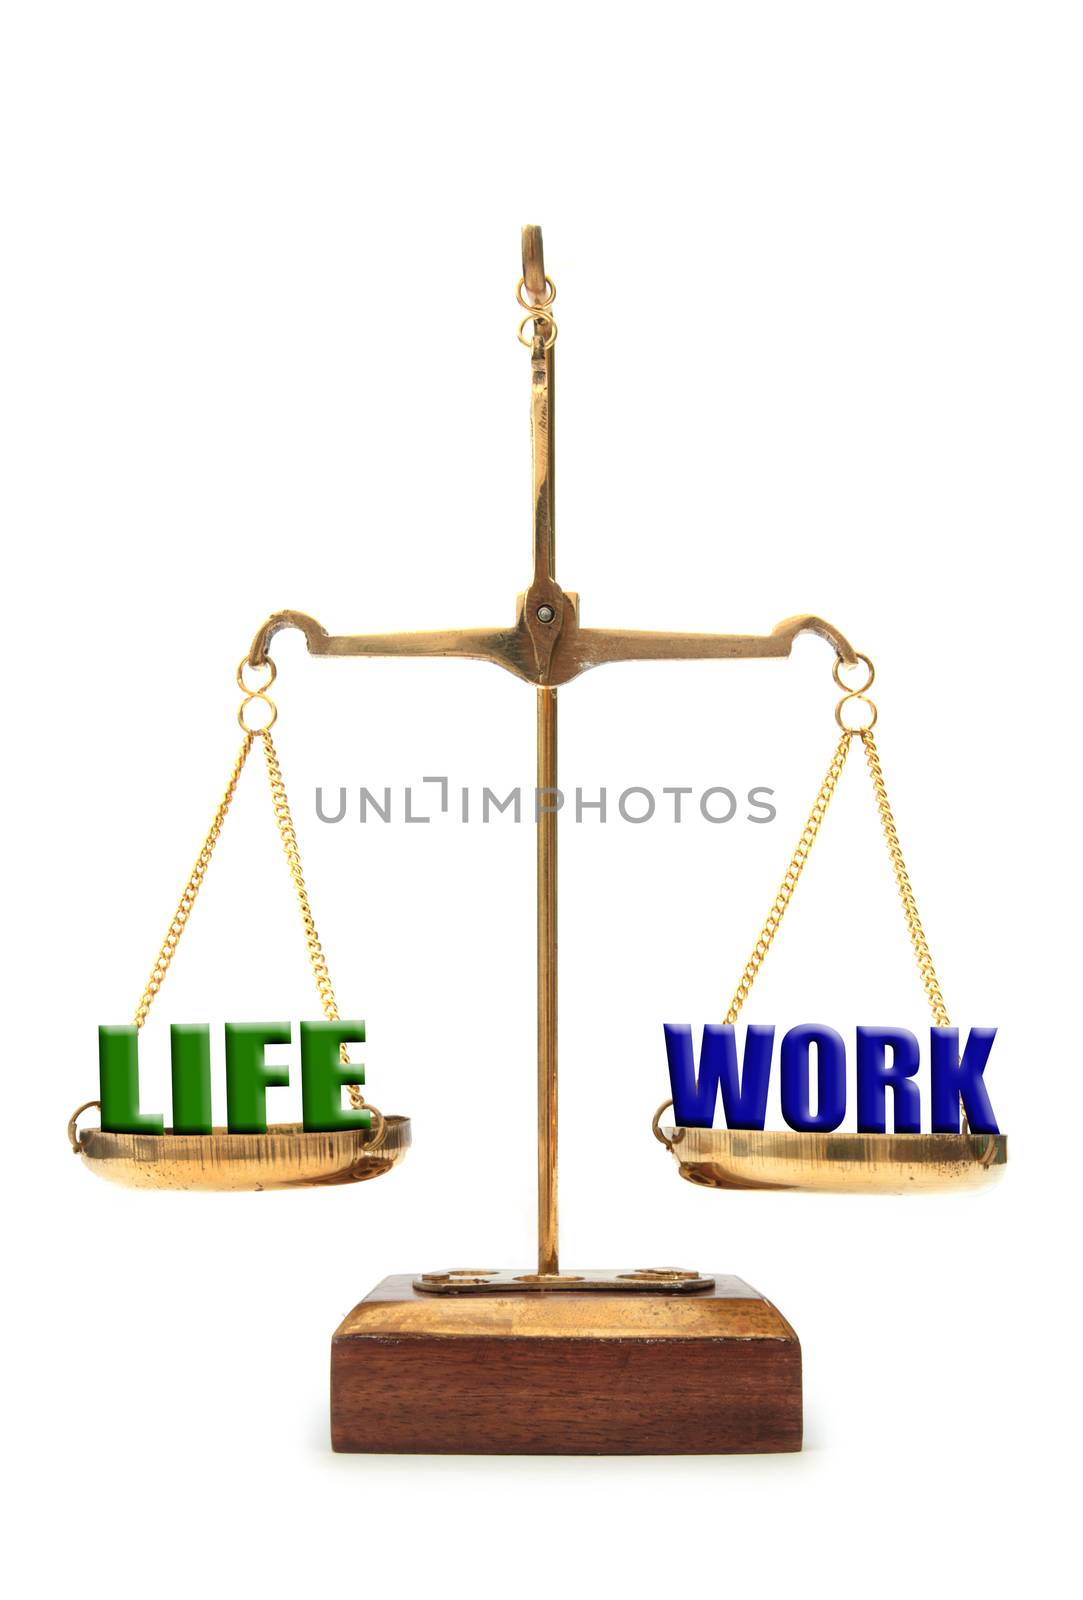 Work life balance concept  by unikpix